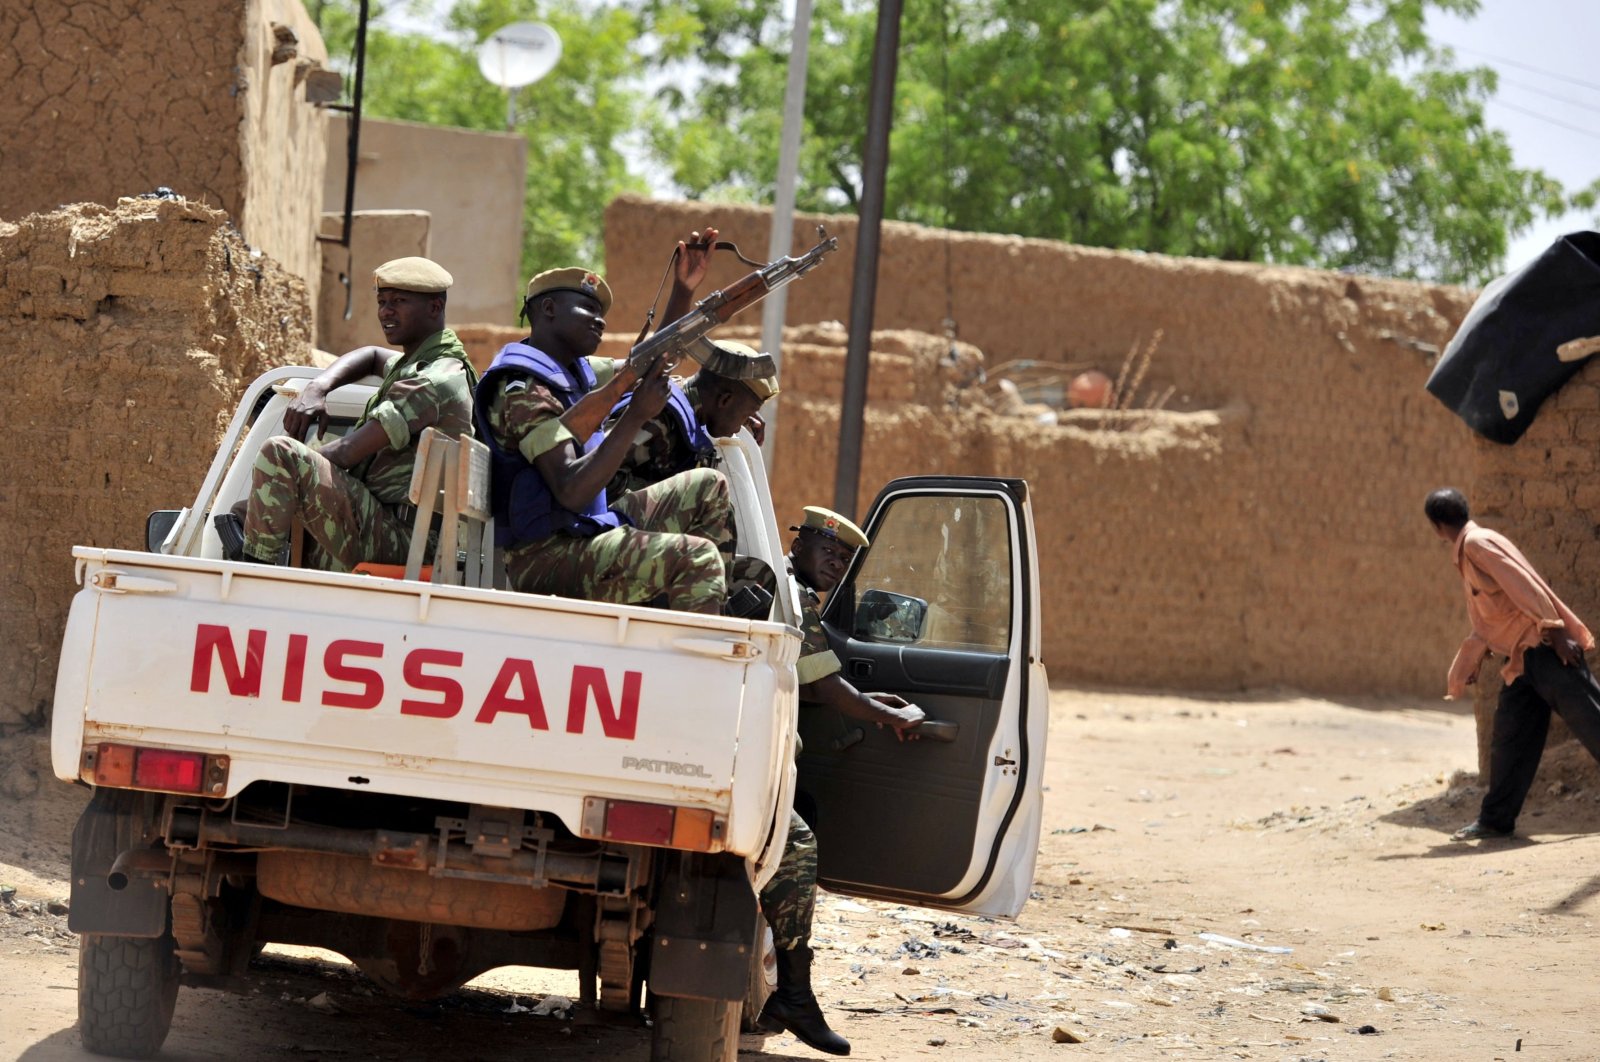 Extremists kill 47 in Burkina Faso in 3rd major